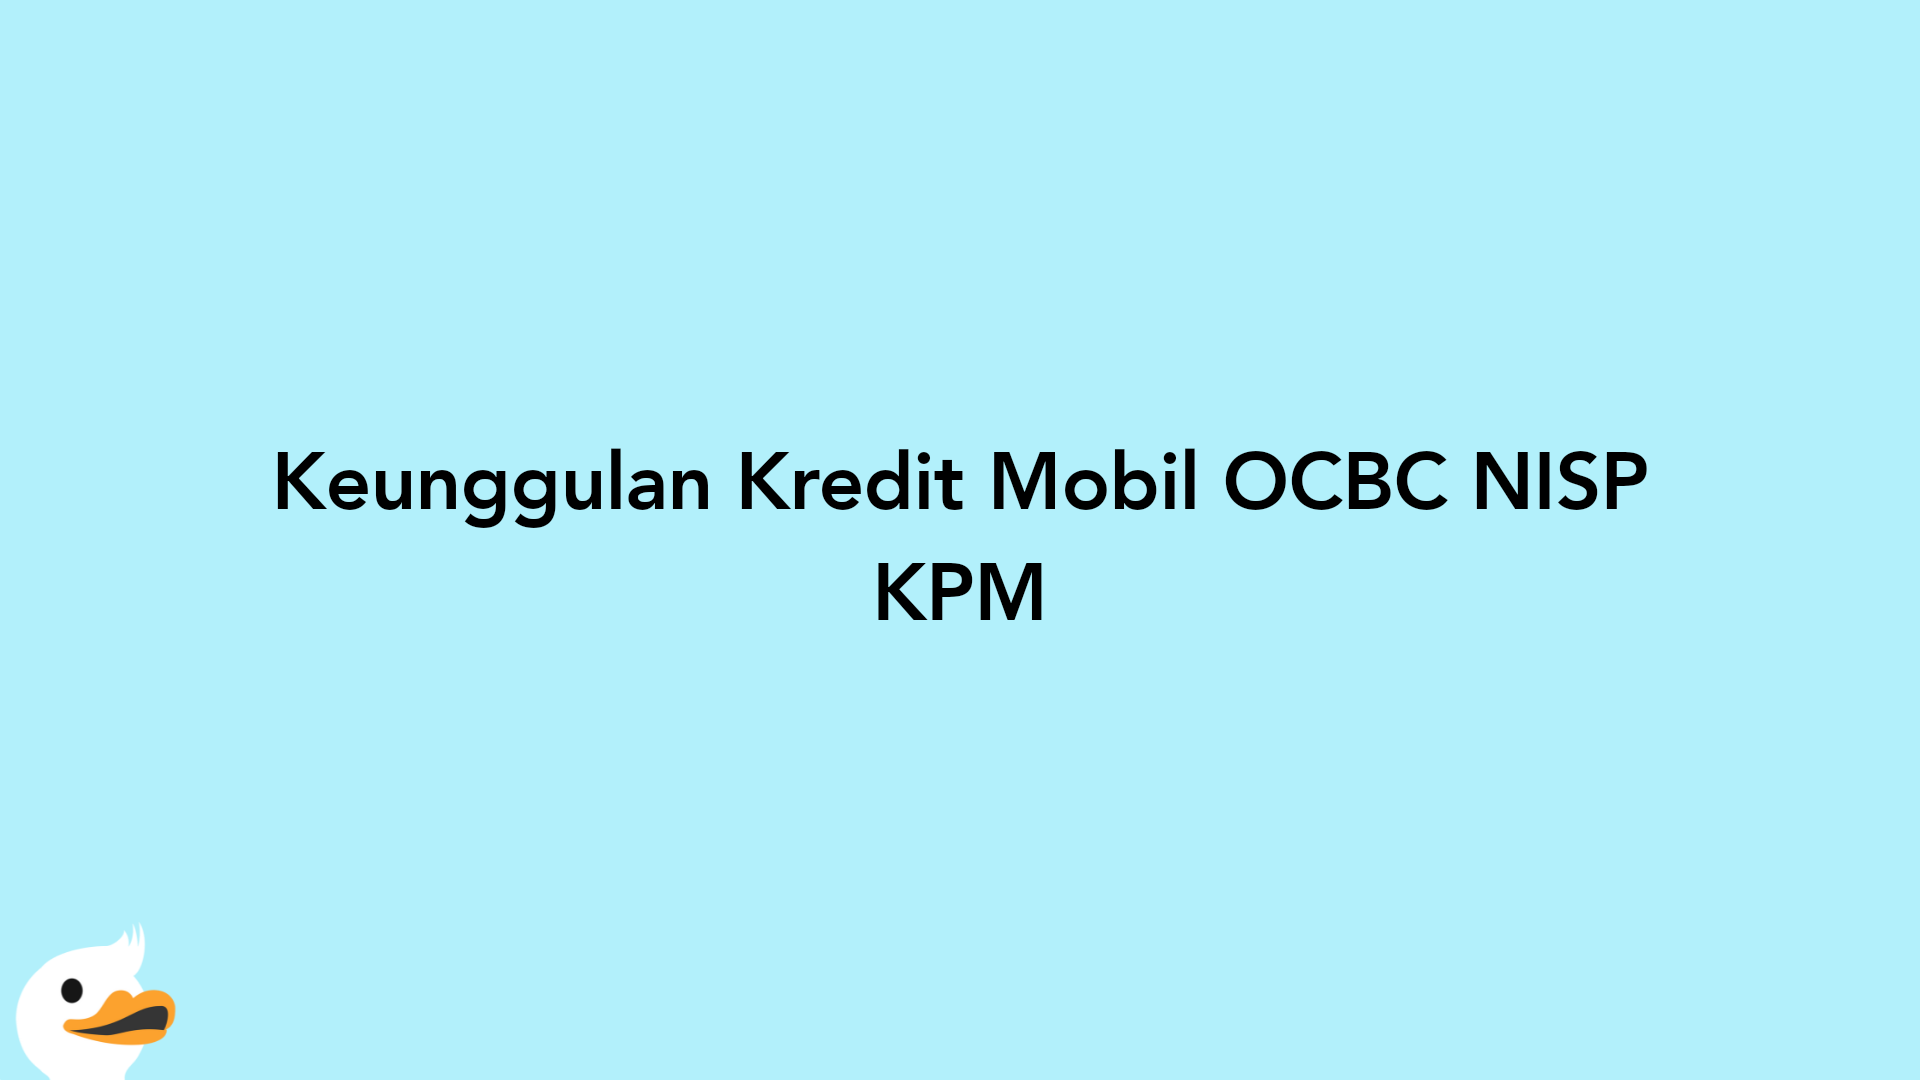 Keunggulan Kredit Mobil OCBC NISP KPM